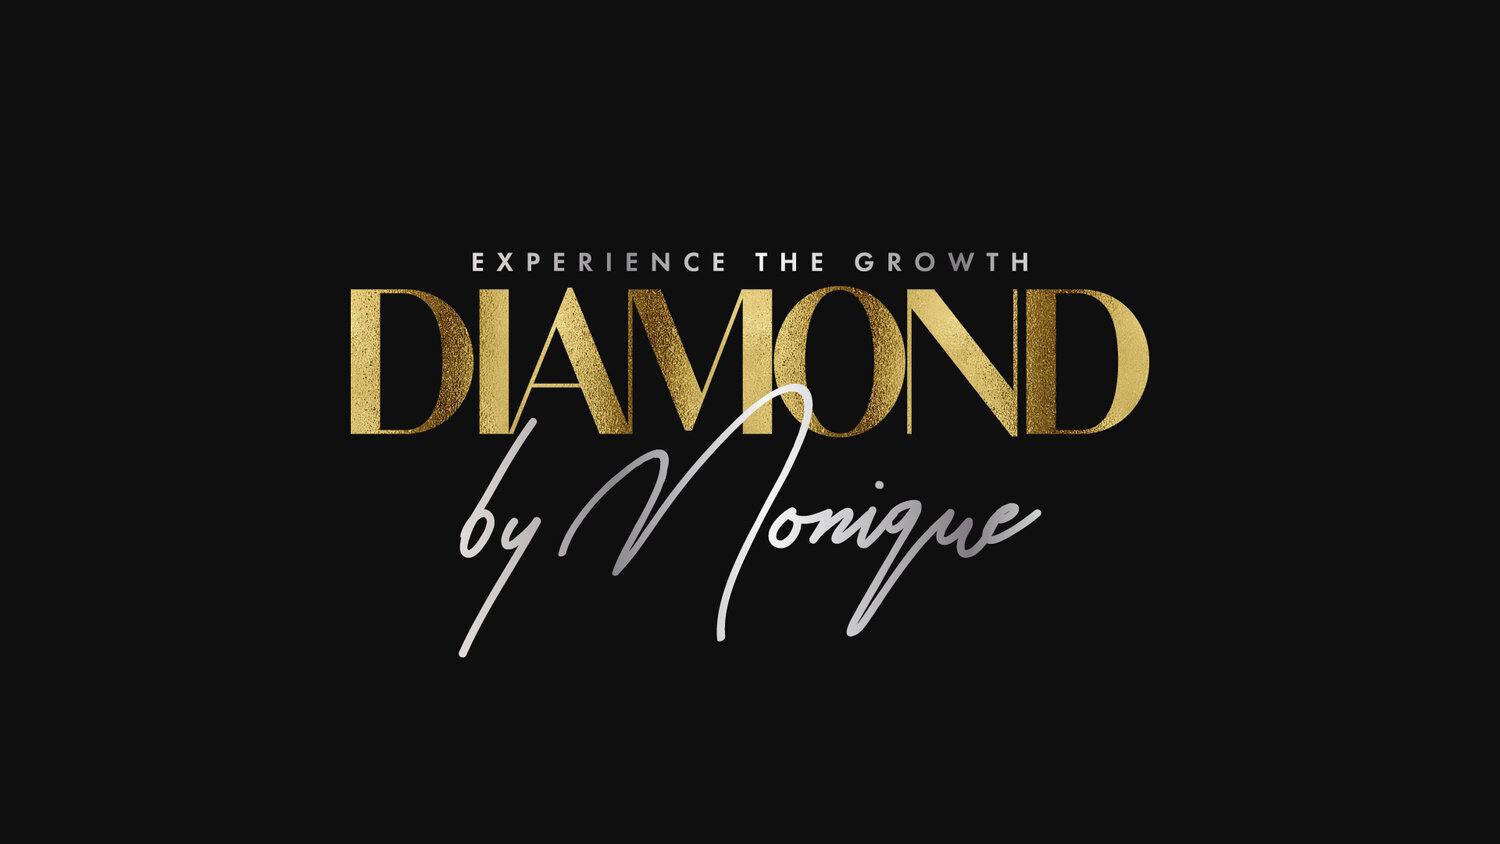 Diamond by monique